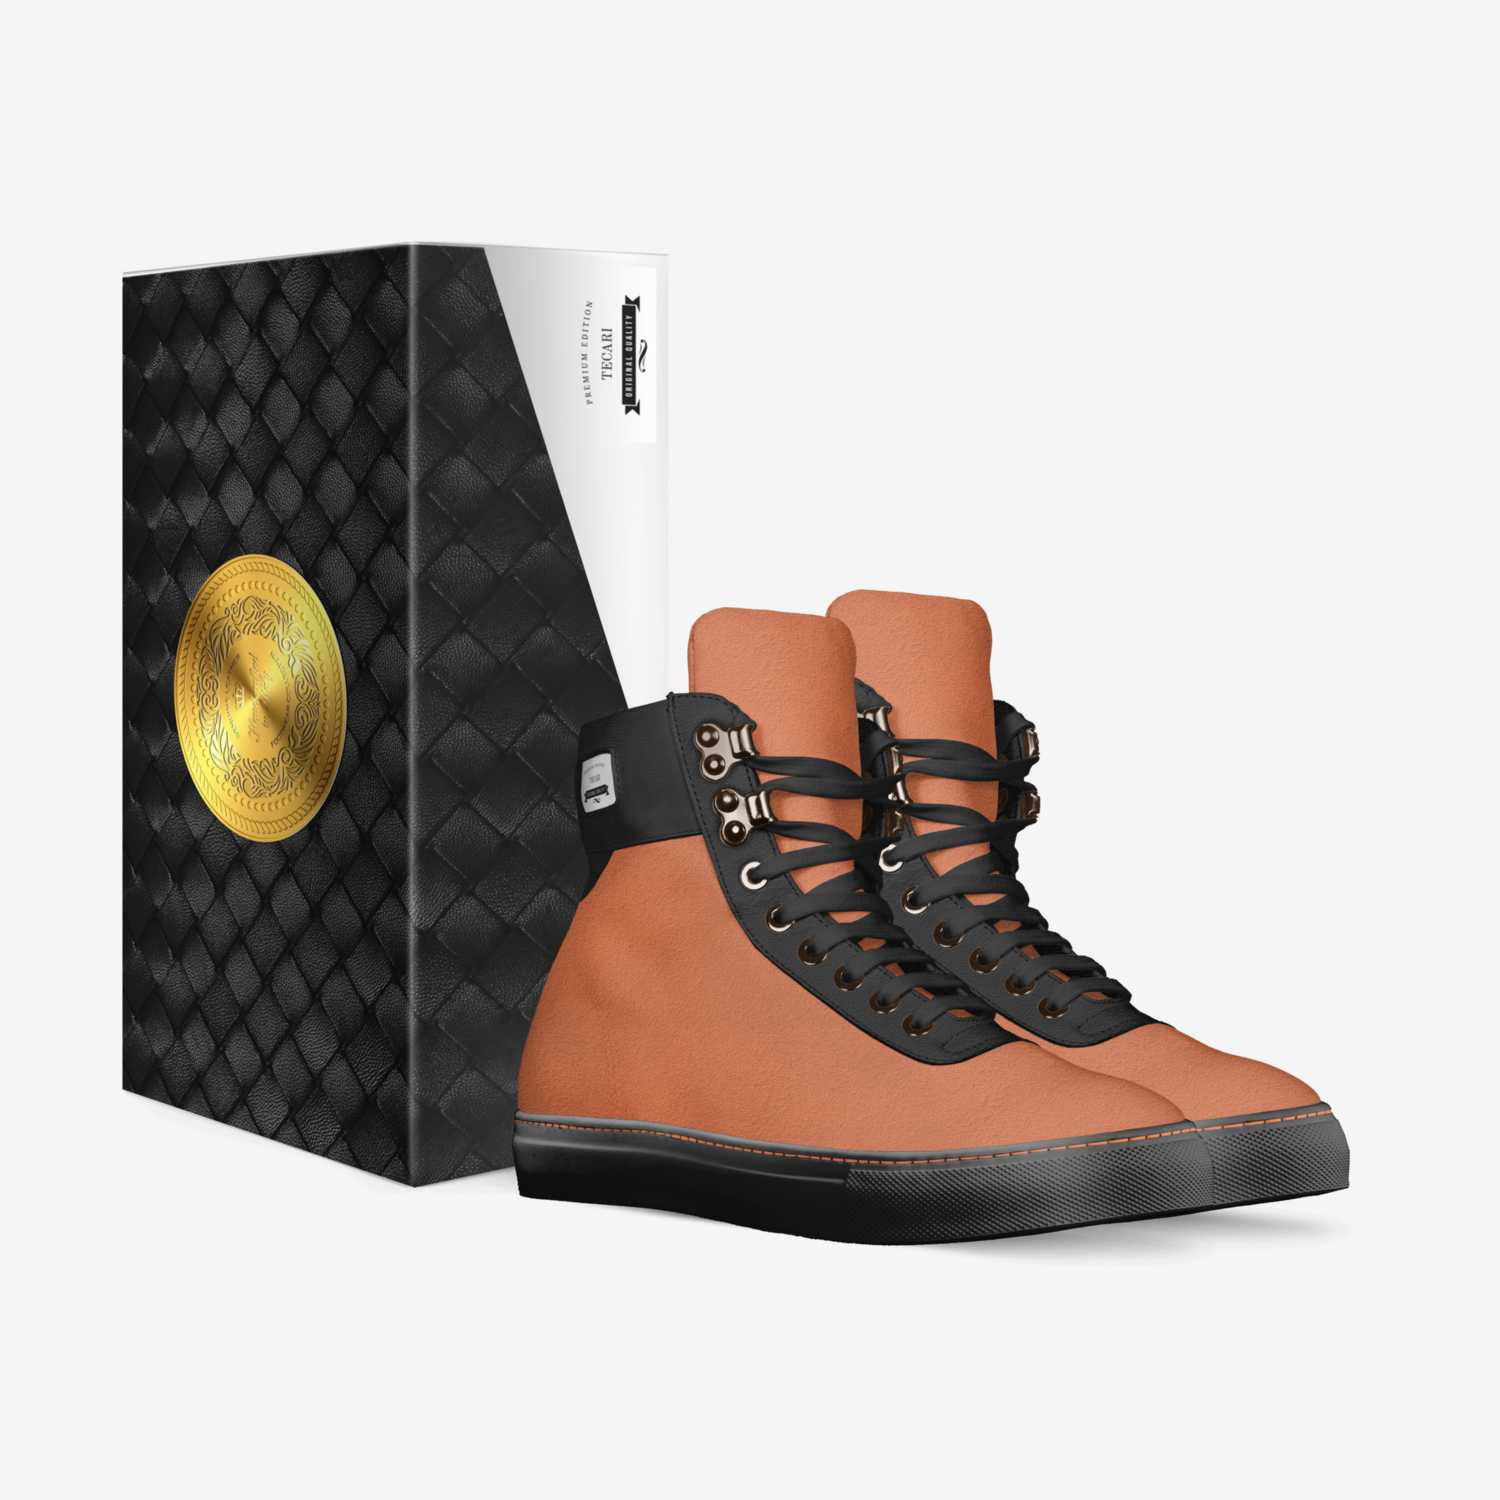 Tecari custom made in Italy shoes by Todd Redditt | Box view